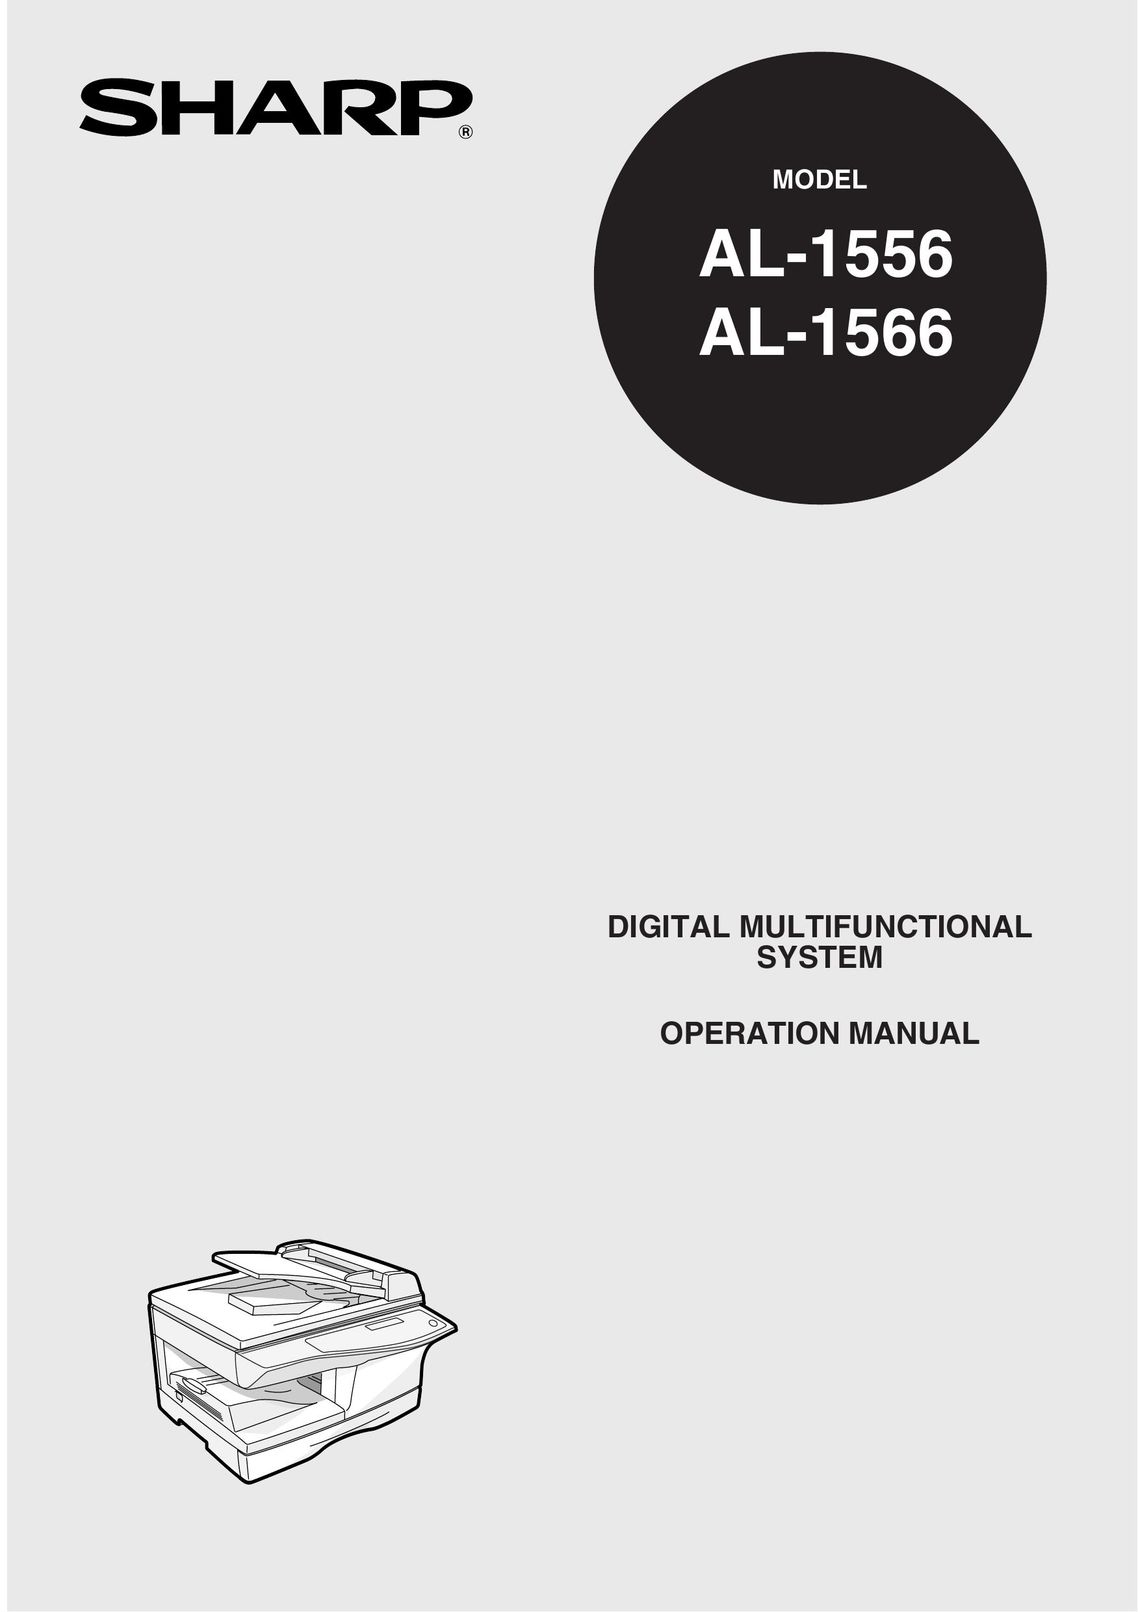 Sharp AL-1566 All in One Printer User Manual